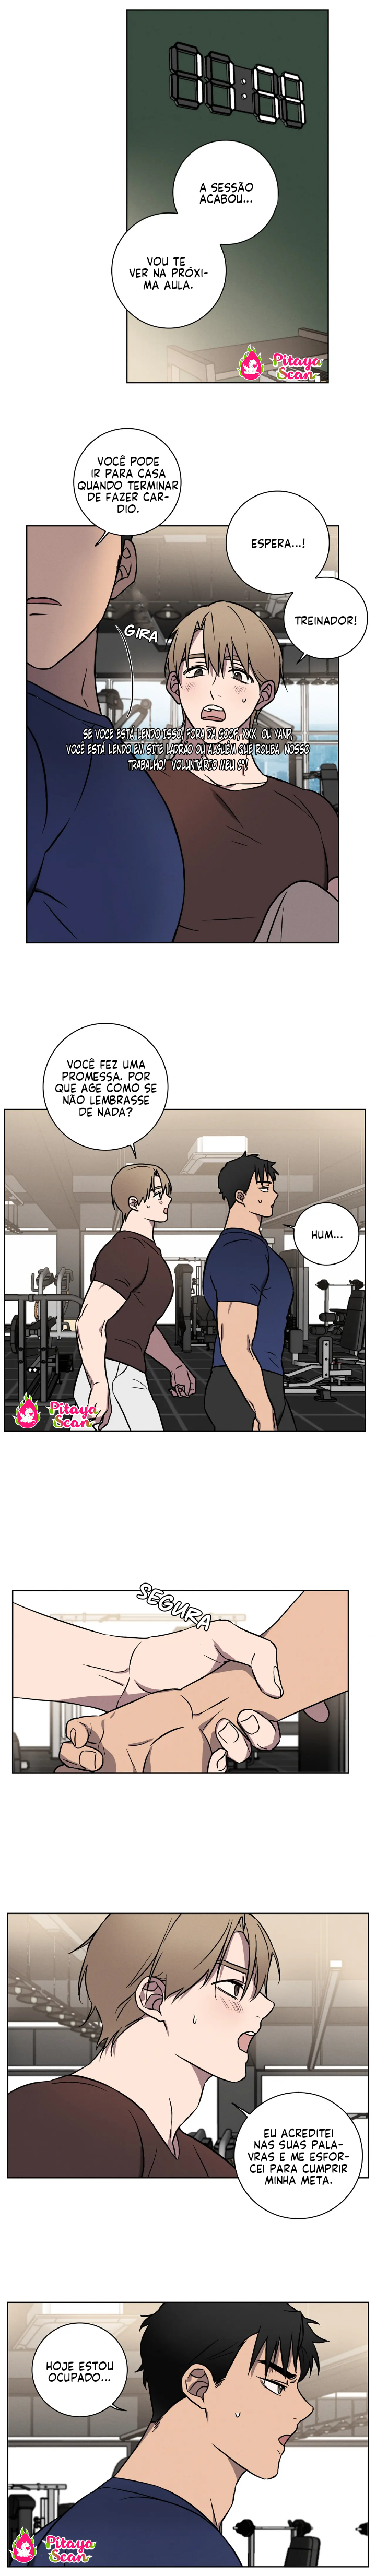 Love gym - Capítulo 1 - Goof Fansub